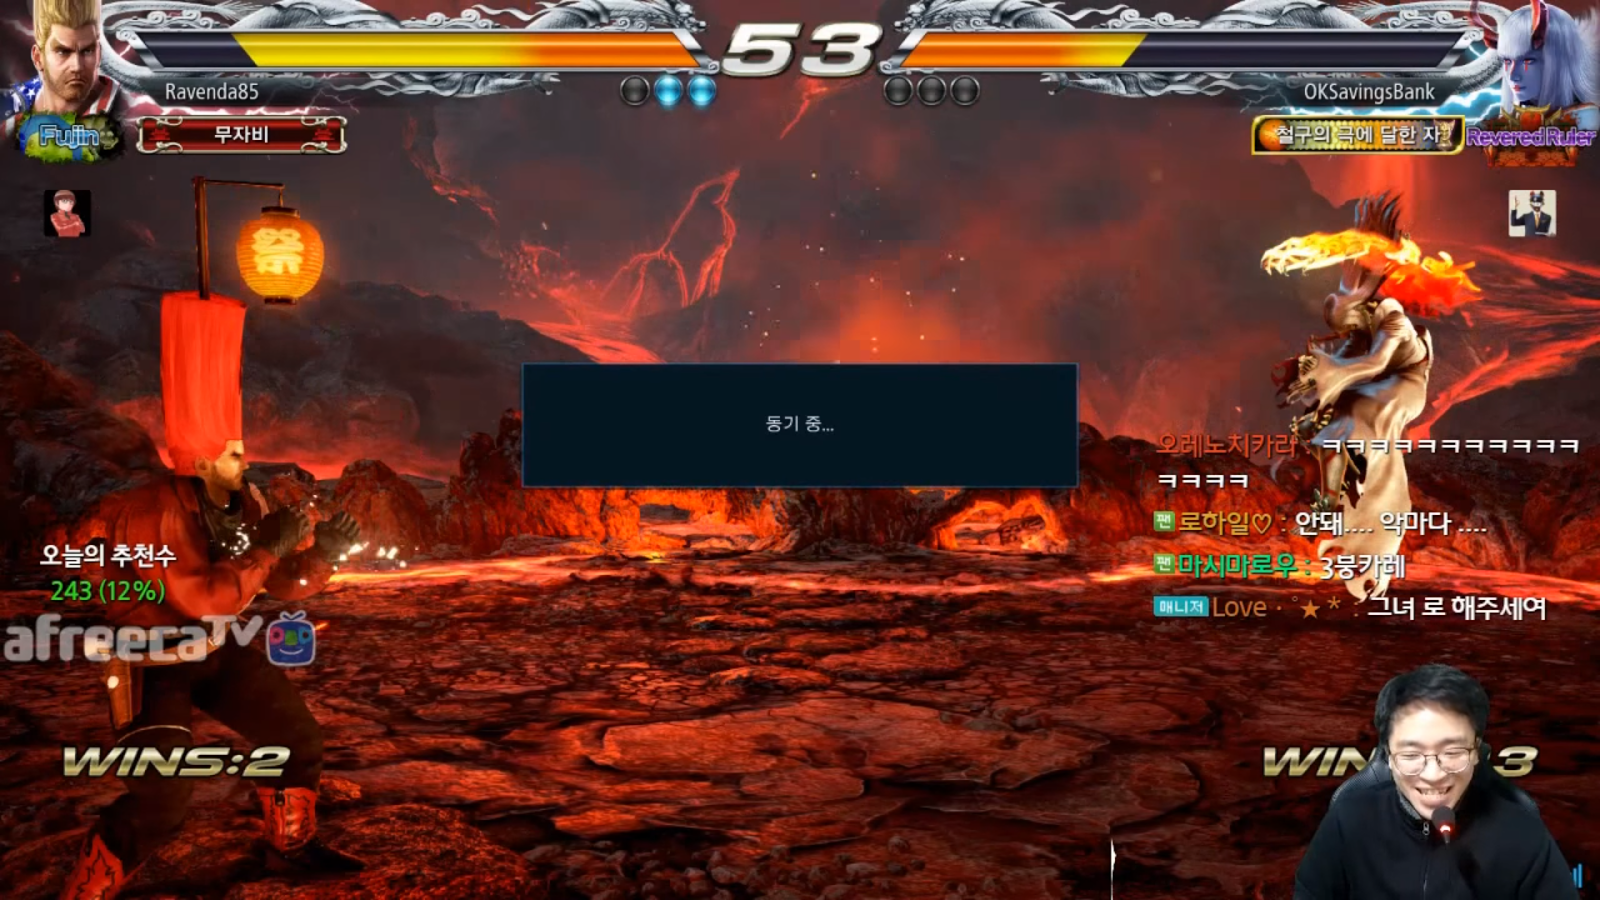 King Jae on X: Rage quitting online in Tekken 7 is becoming